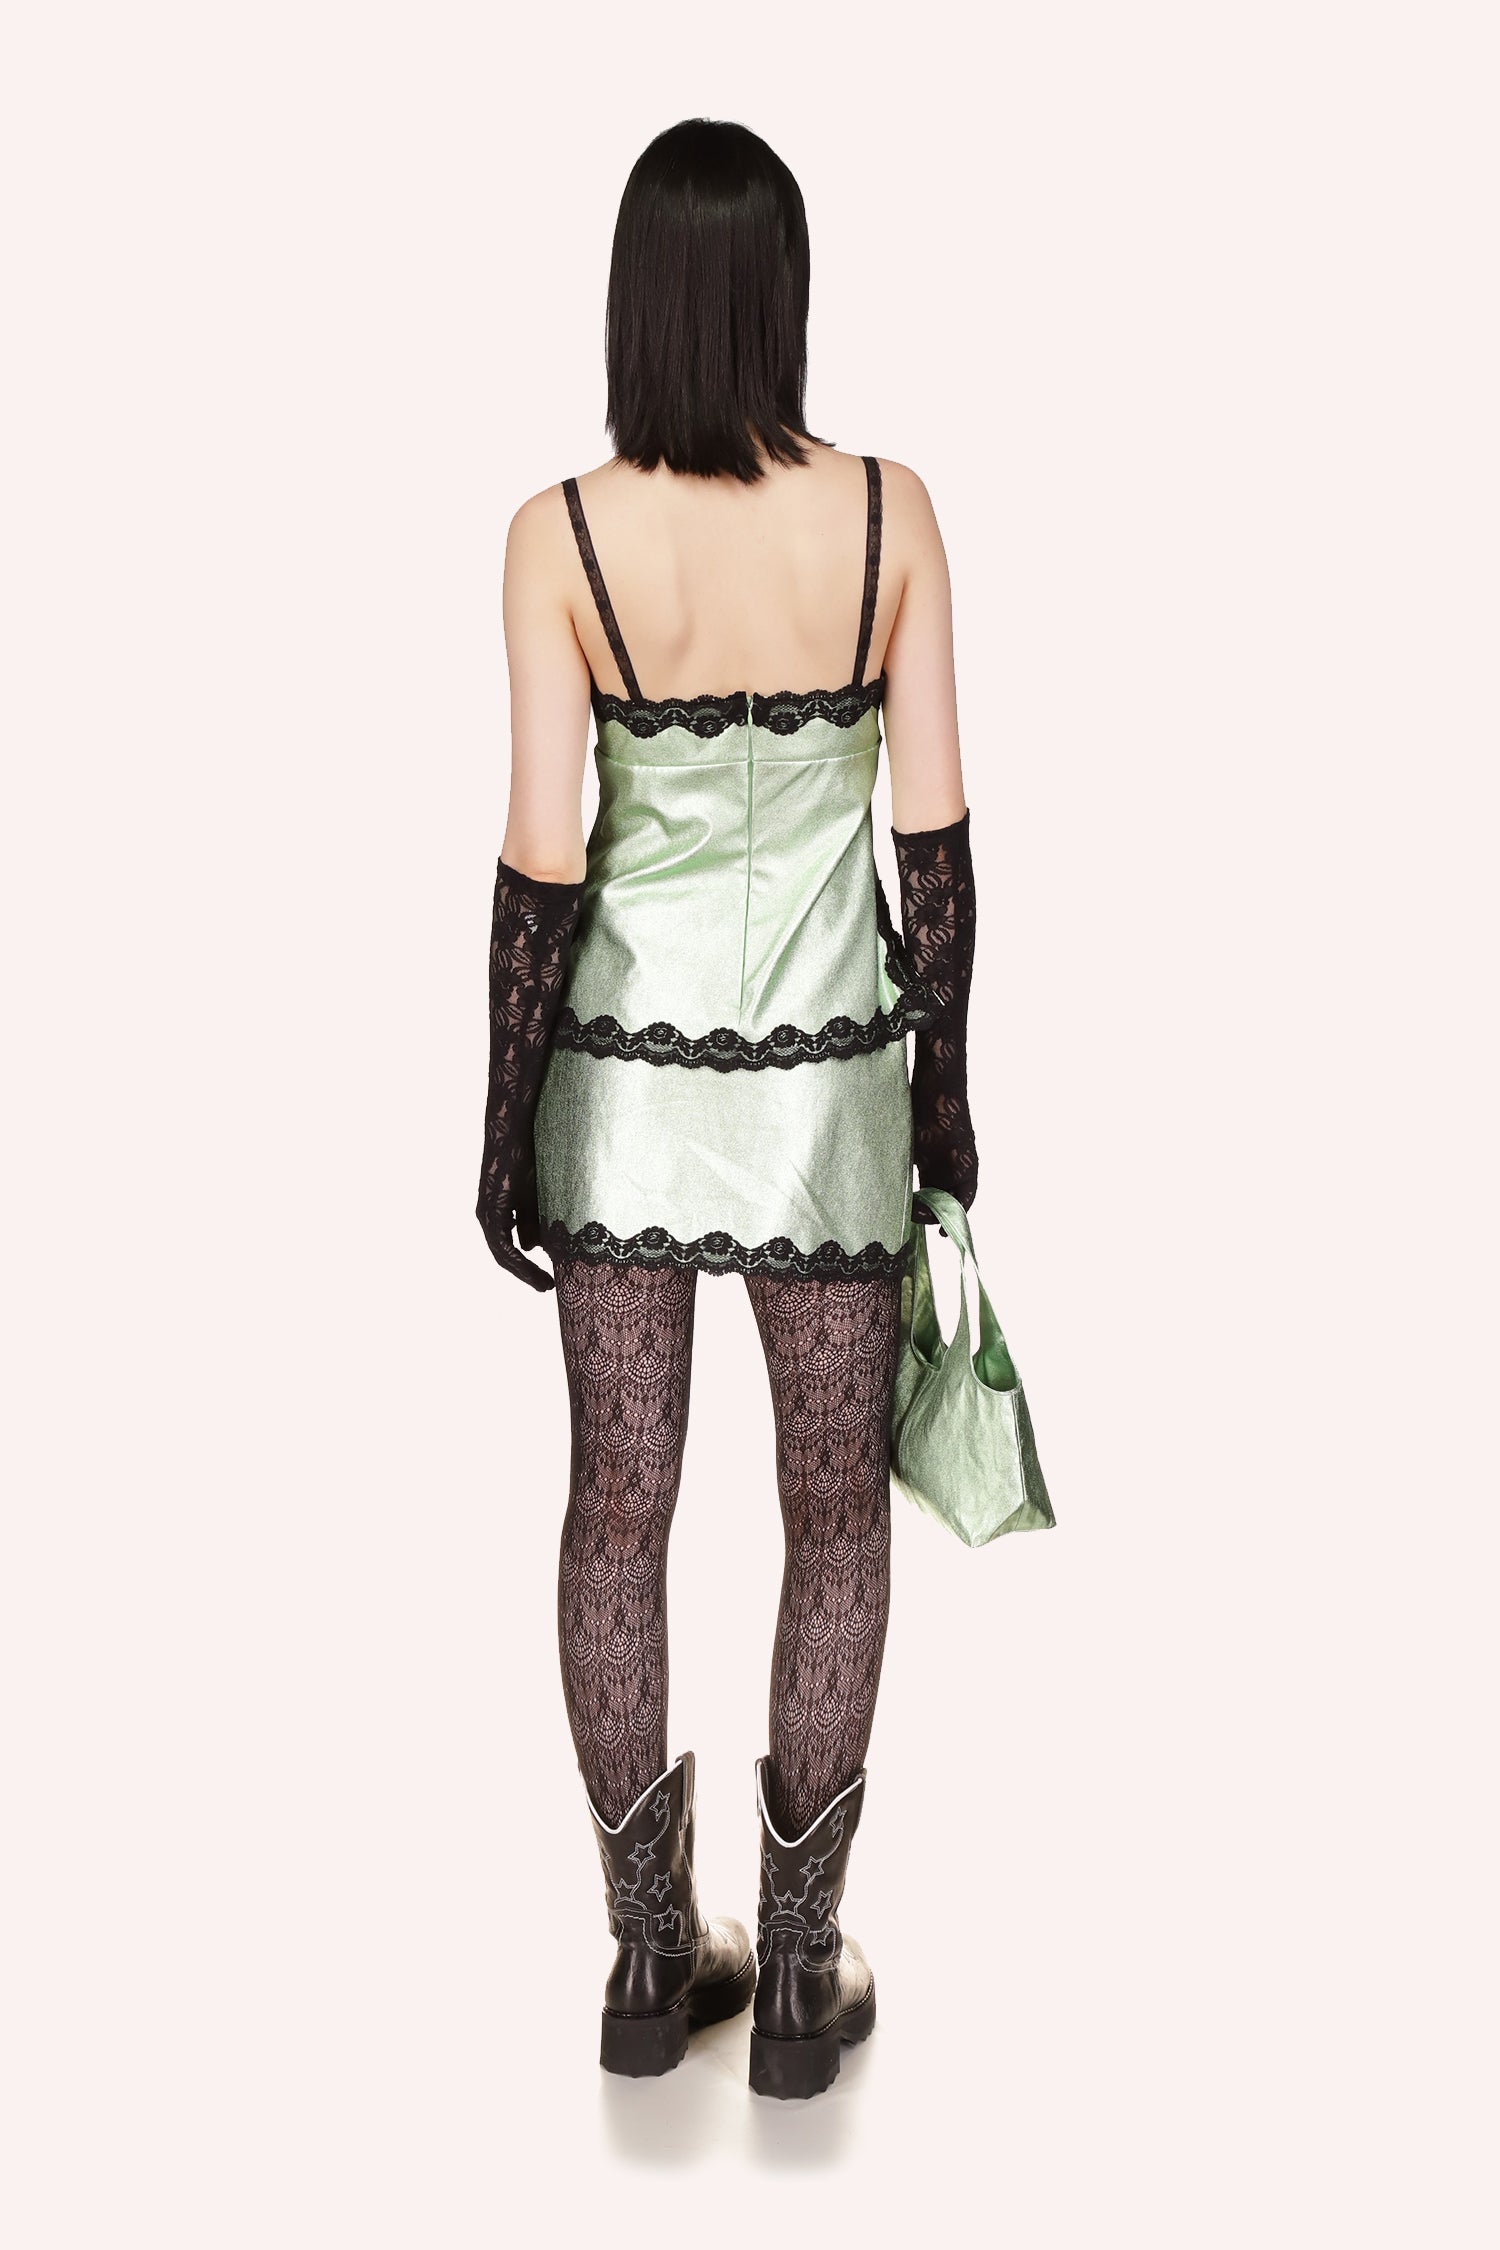 Anna Sui's Mini Skirt Peppermint, black lace on hems, 